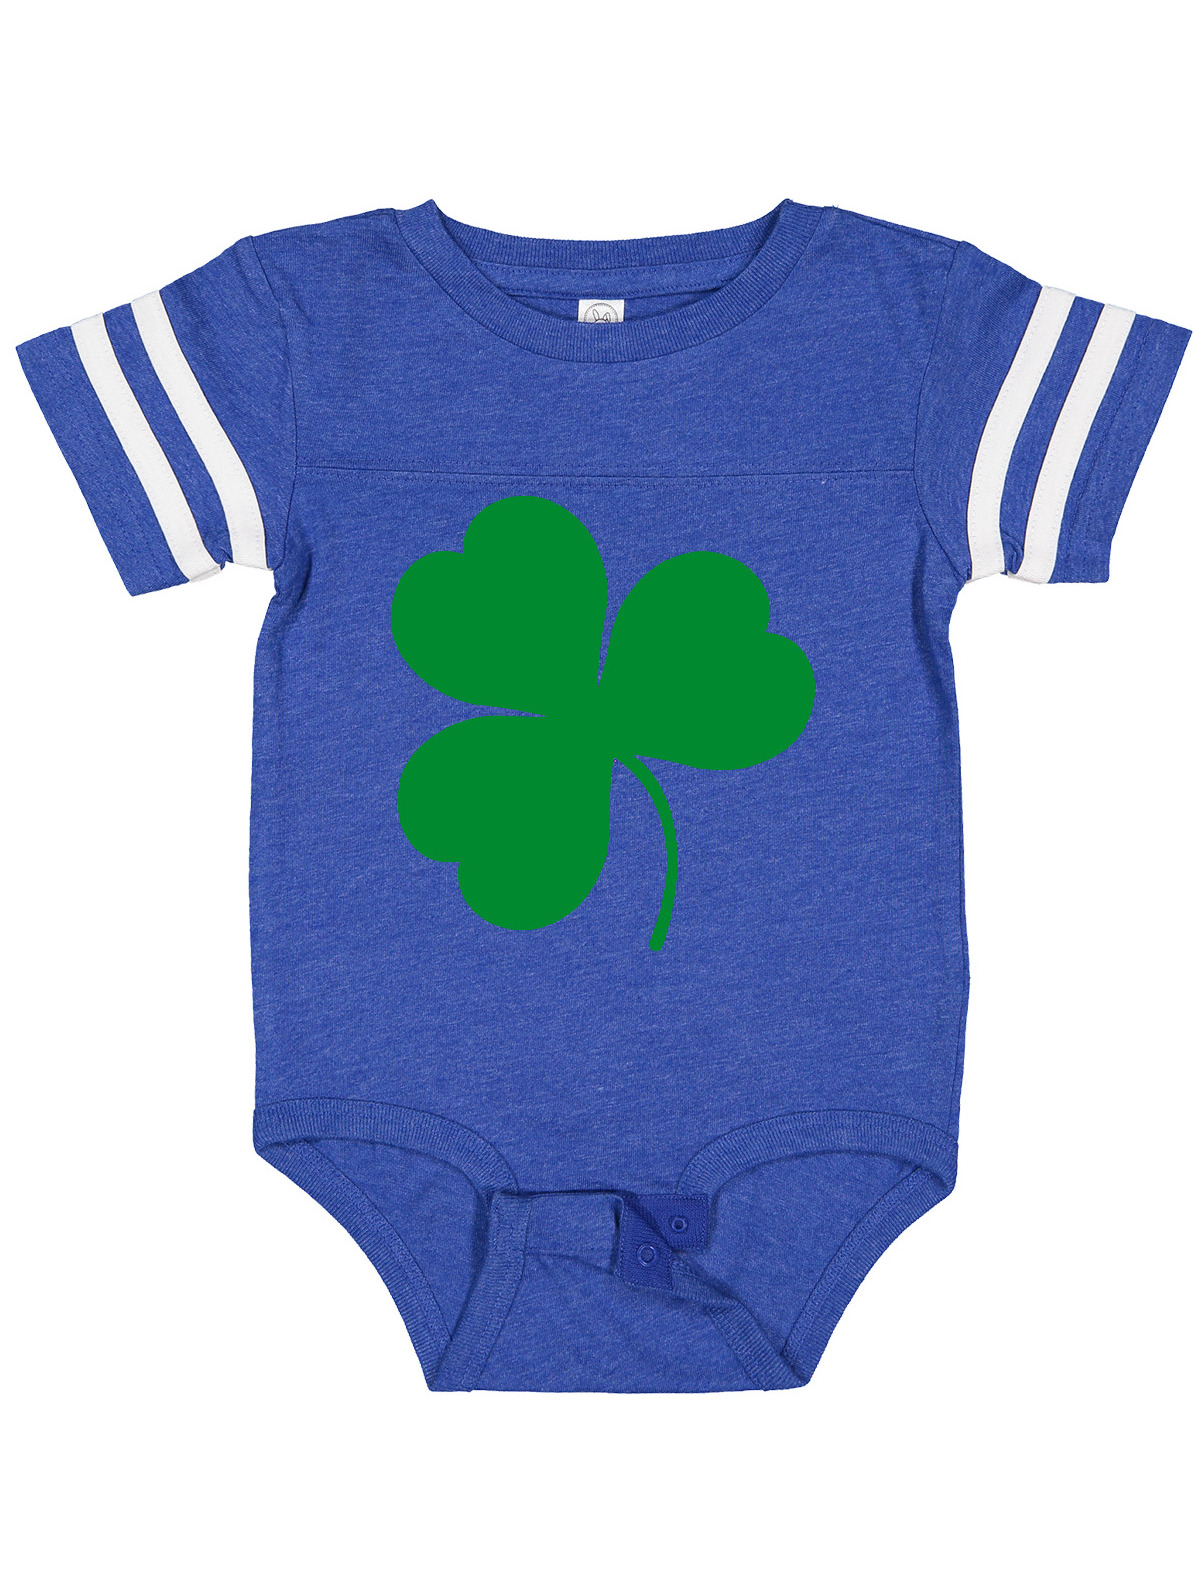 Inktastic Green Irish Shamrock Clover Boys or Girls Baby Bodysuit - image 1 of 4